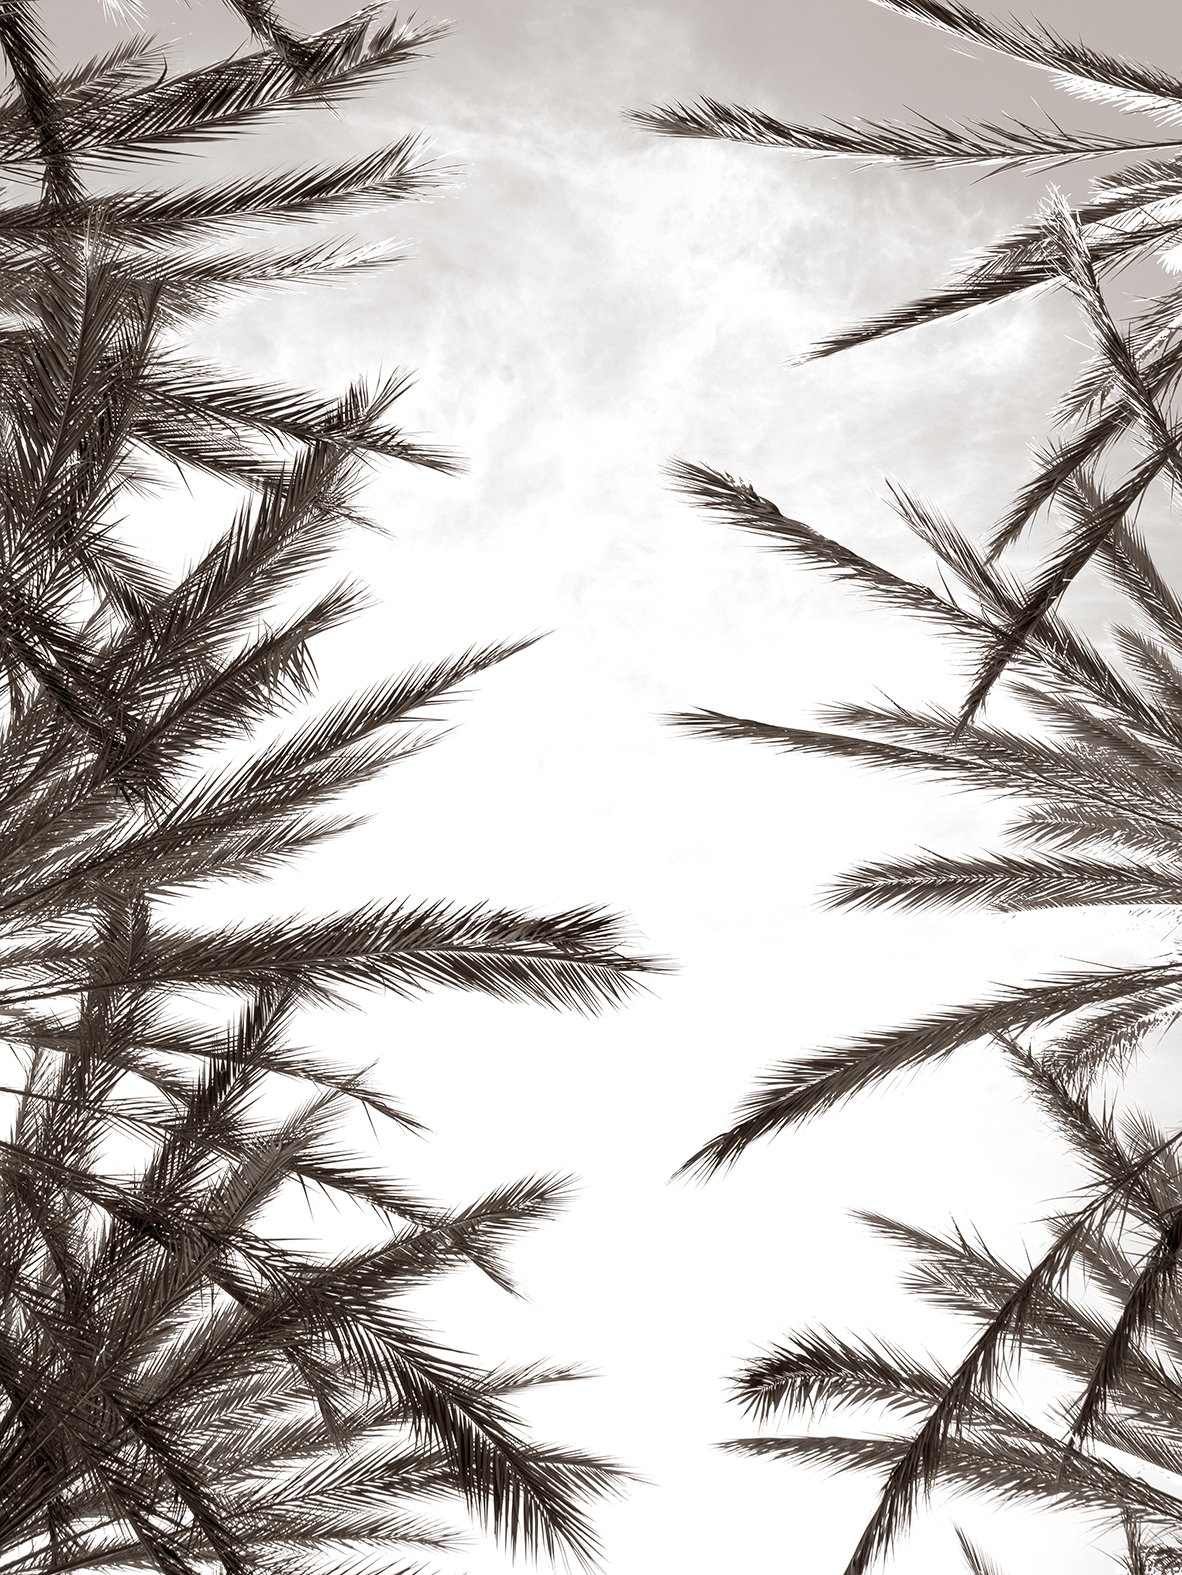 Silver Palms